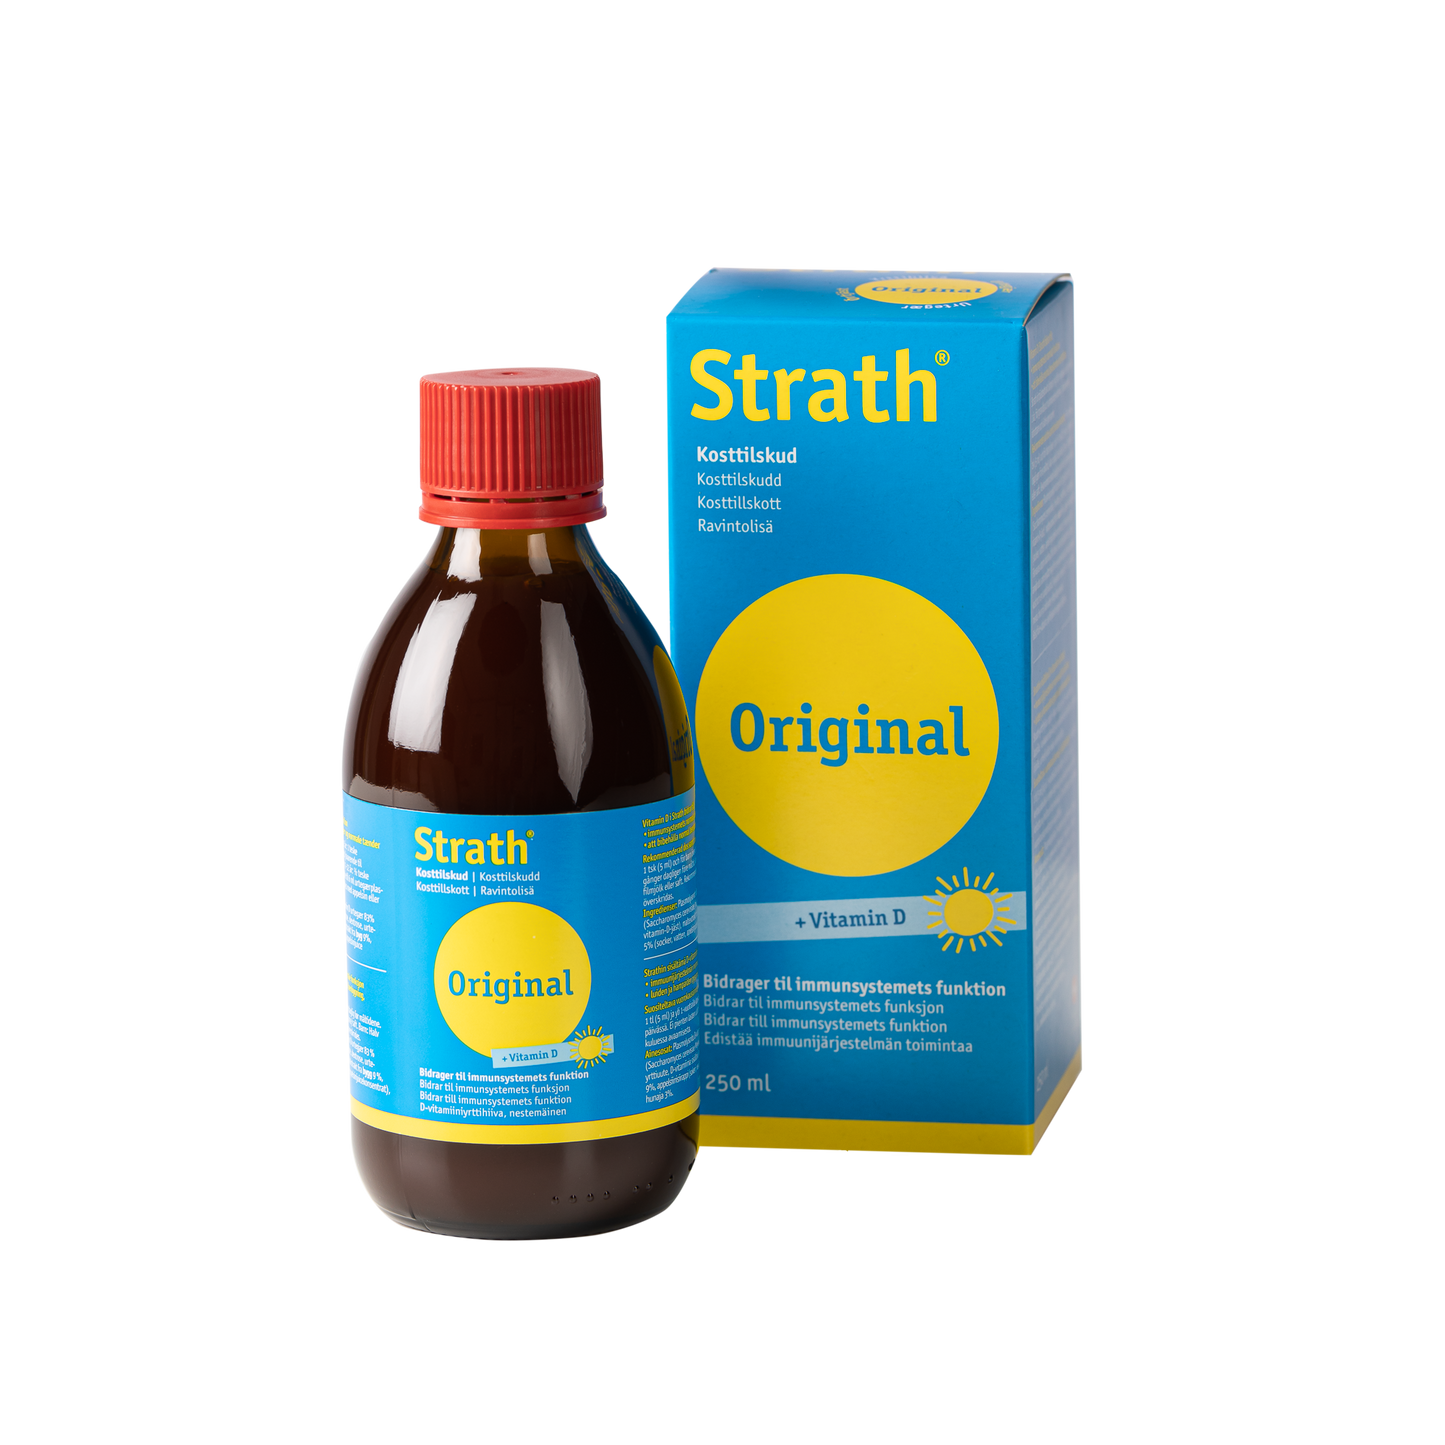 Strath Original + Vitamin D